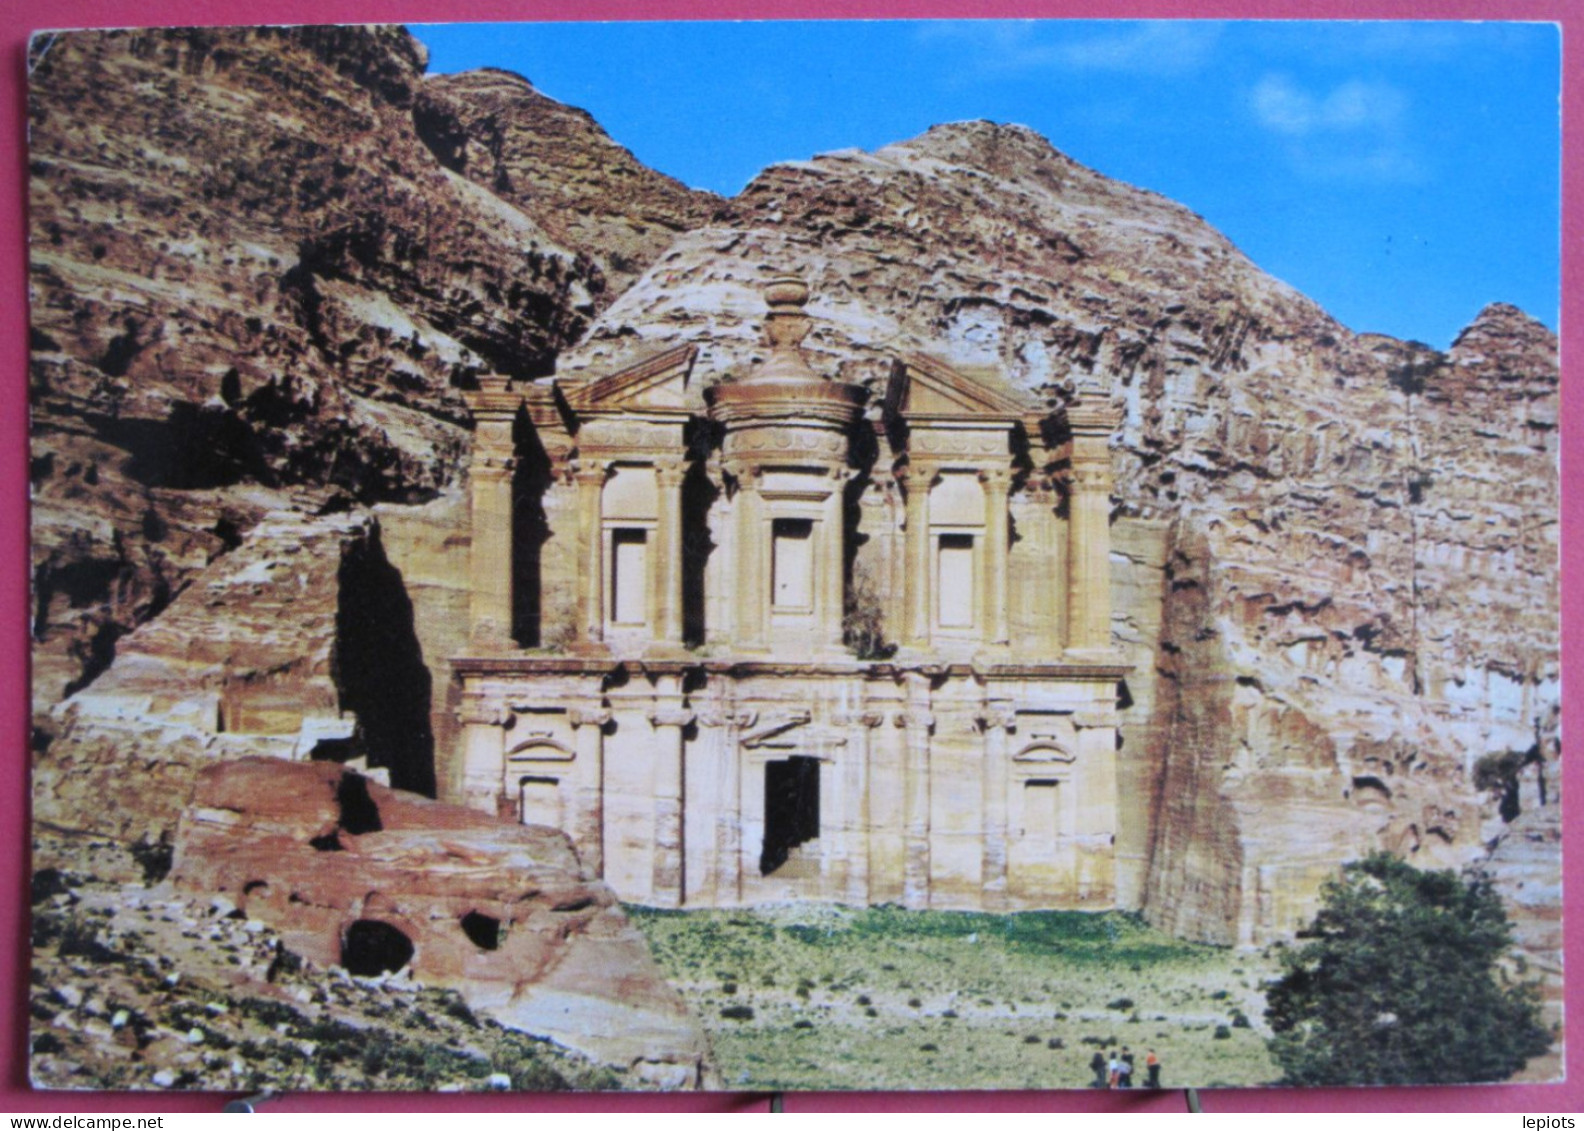 Jordanie - Ed-Deir - View Of Eddeer At Petra - Jordan